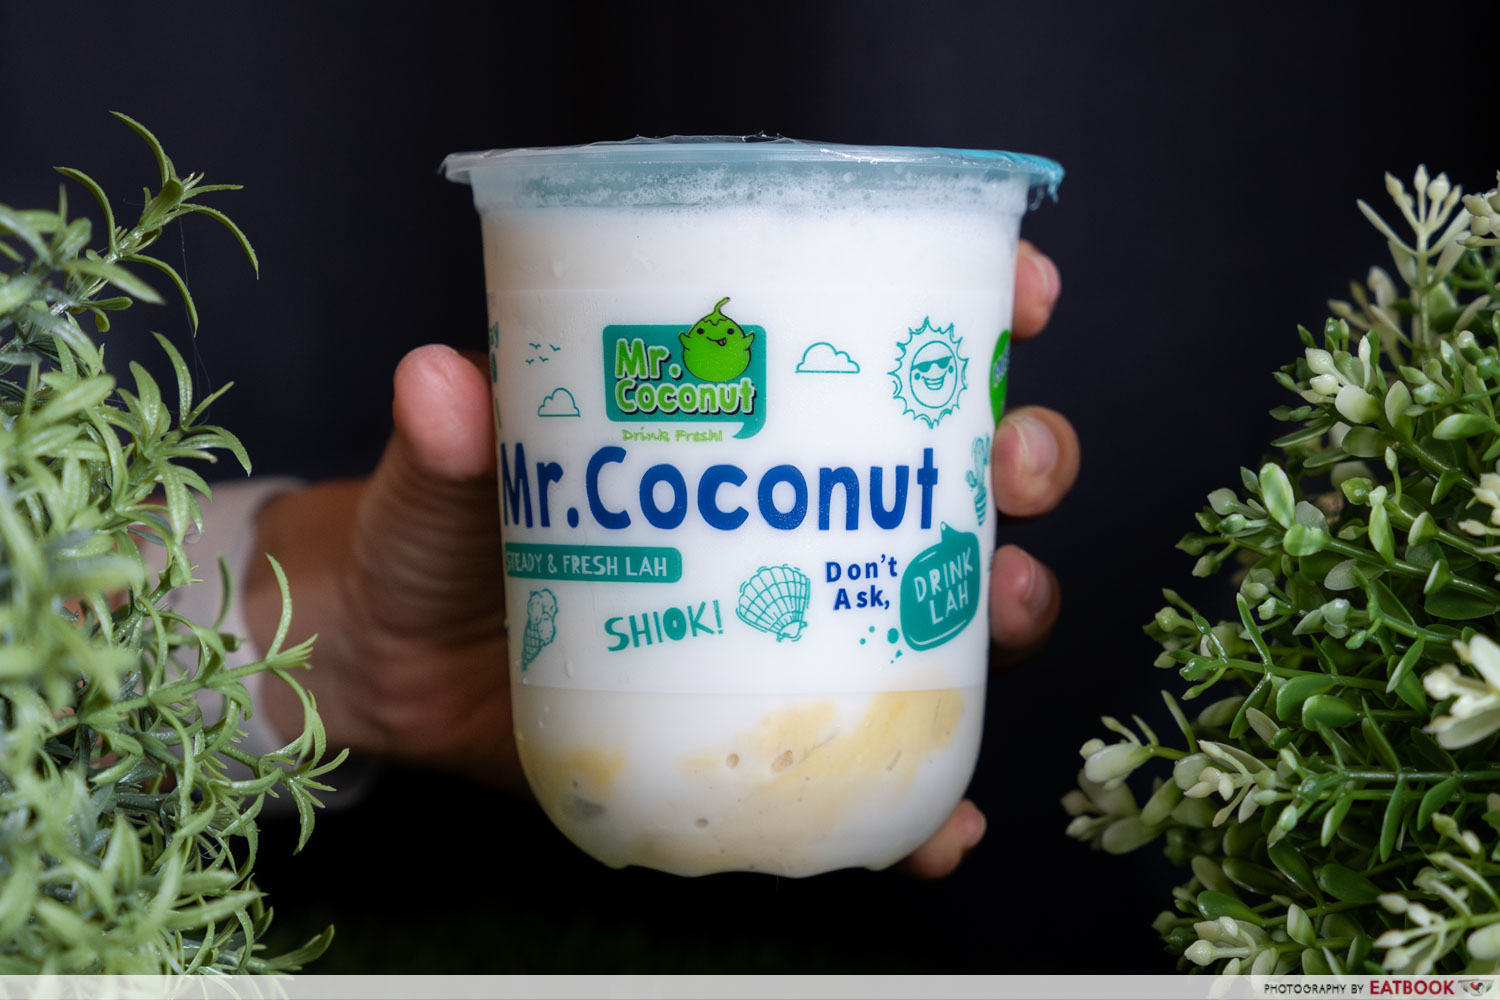 mr coconut - coconut mao shan wang shake single